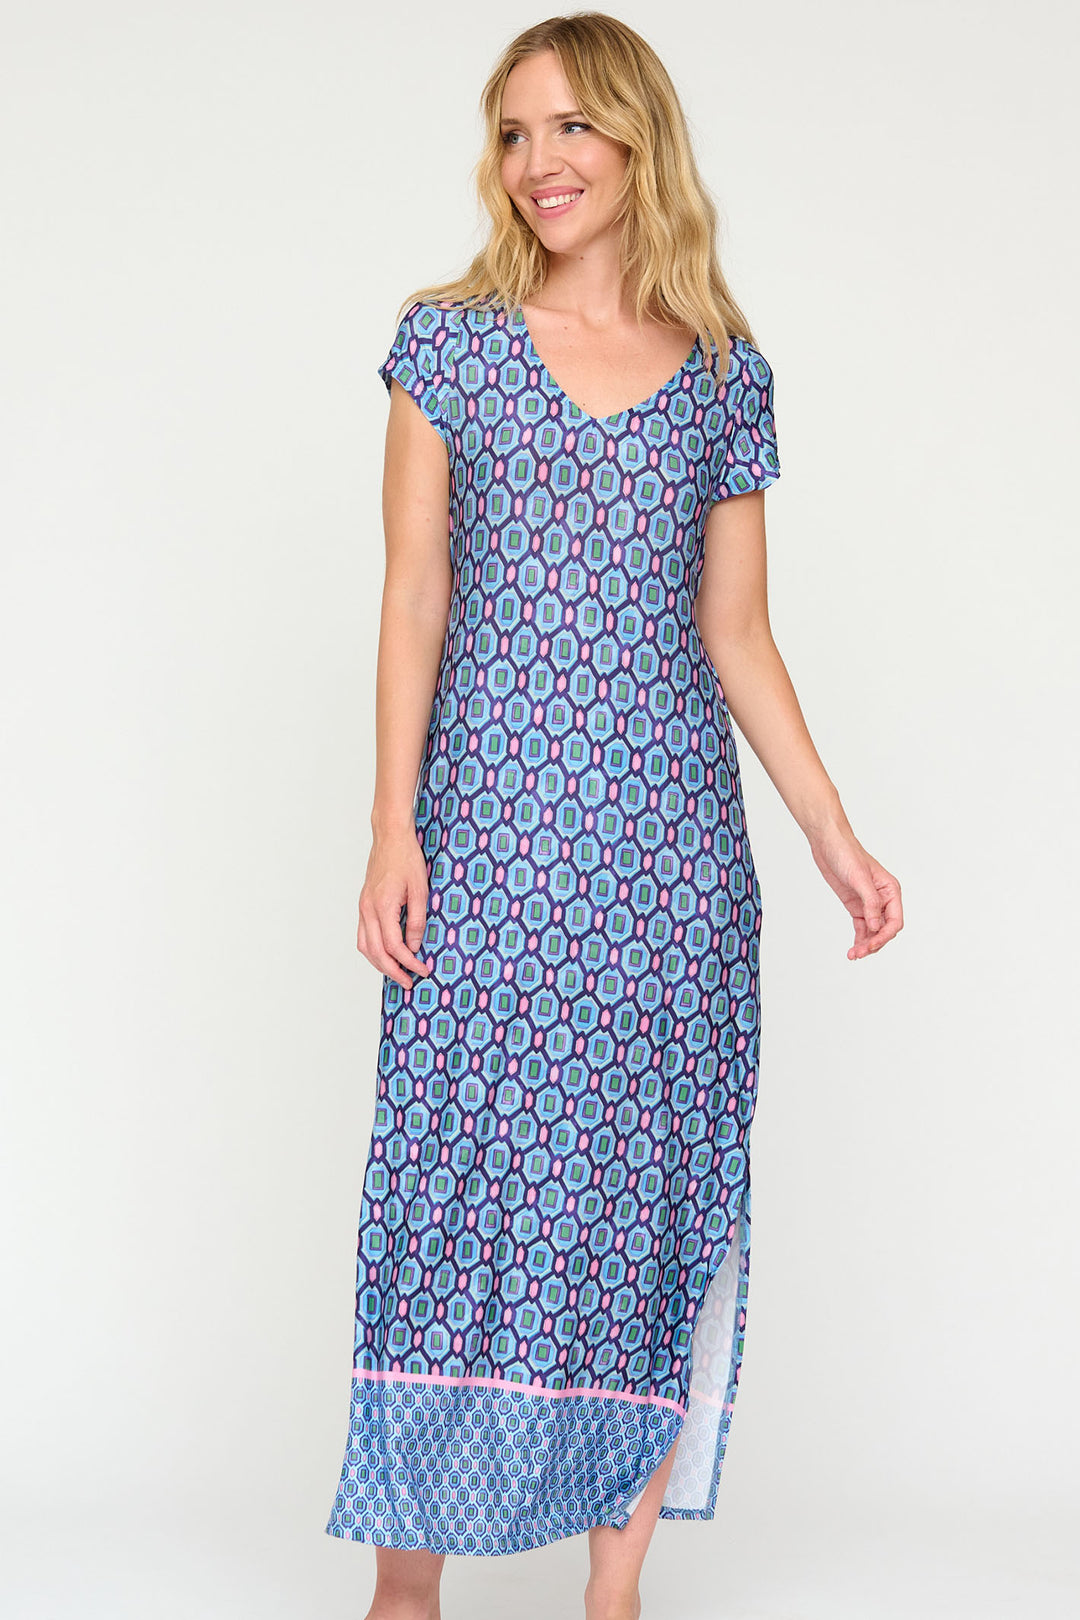 Tinta Pili24 Blue Print V-Neck Short Sleeve Dress - Rouge Boutique Inverness